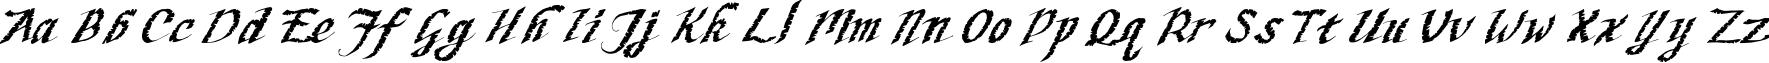 Пример написания английского алфавита шрифтом AppleSeed